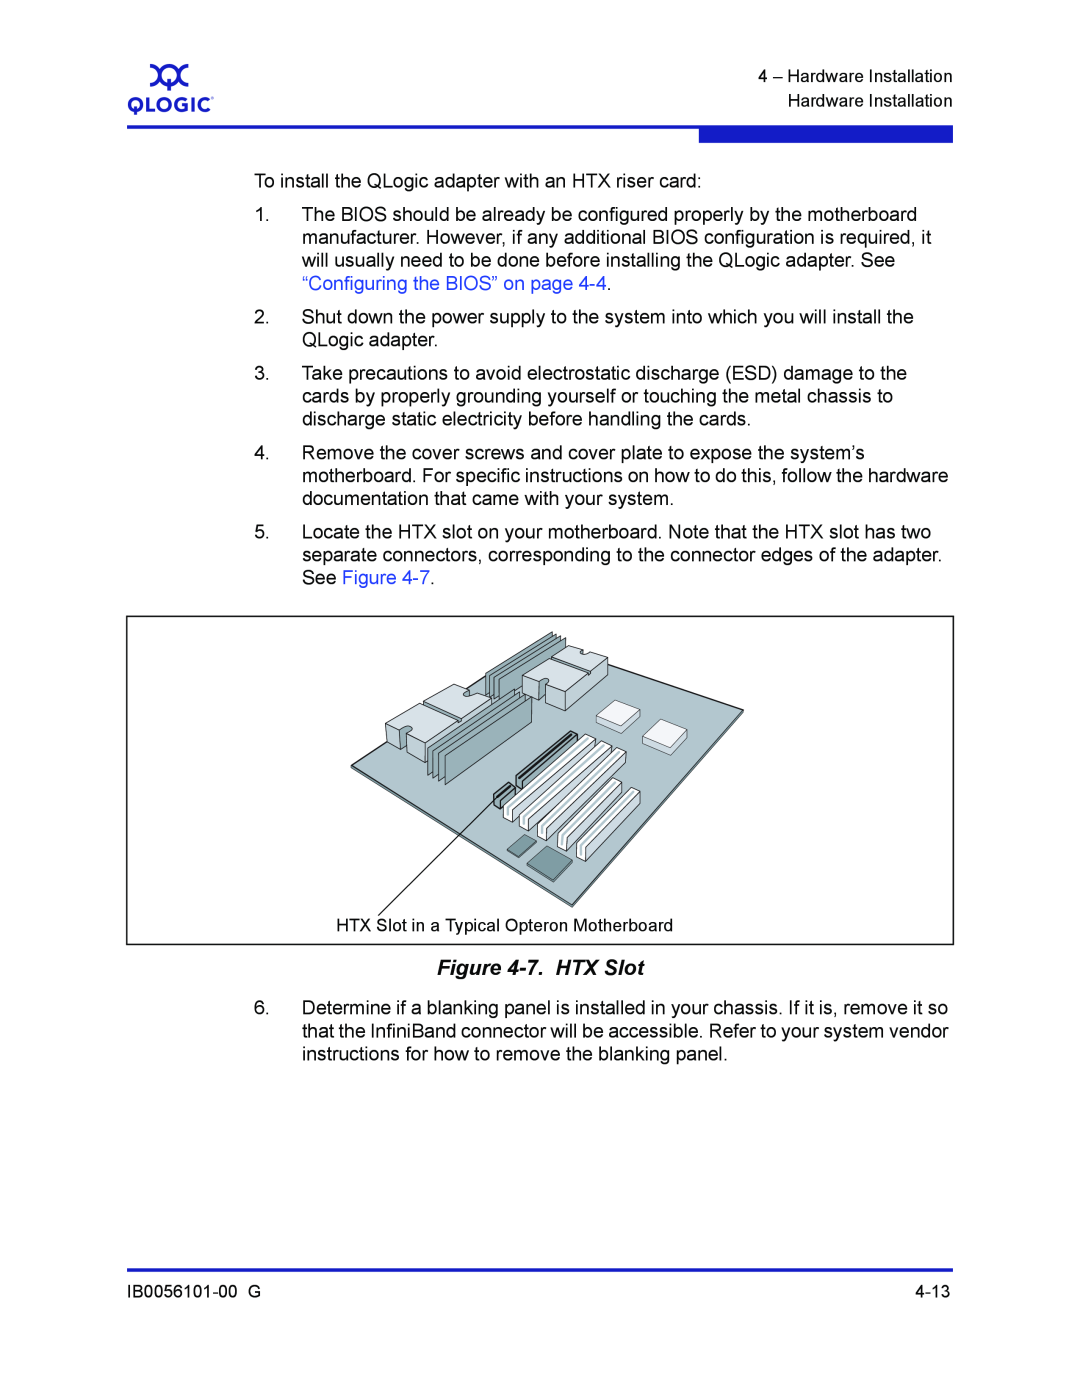 Q-Logic IB0056101-00 G manual 7. HTX Slot 